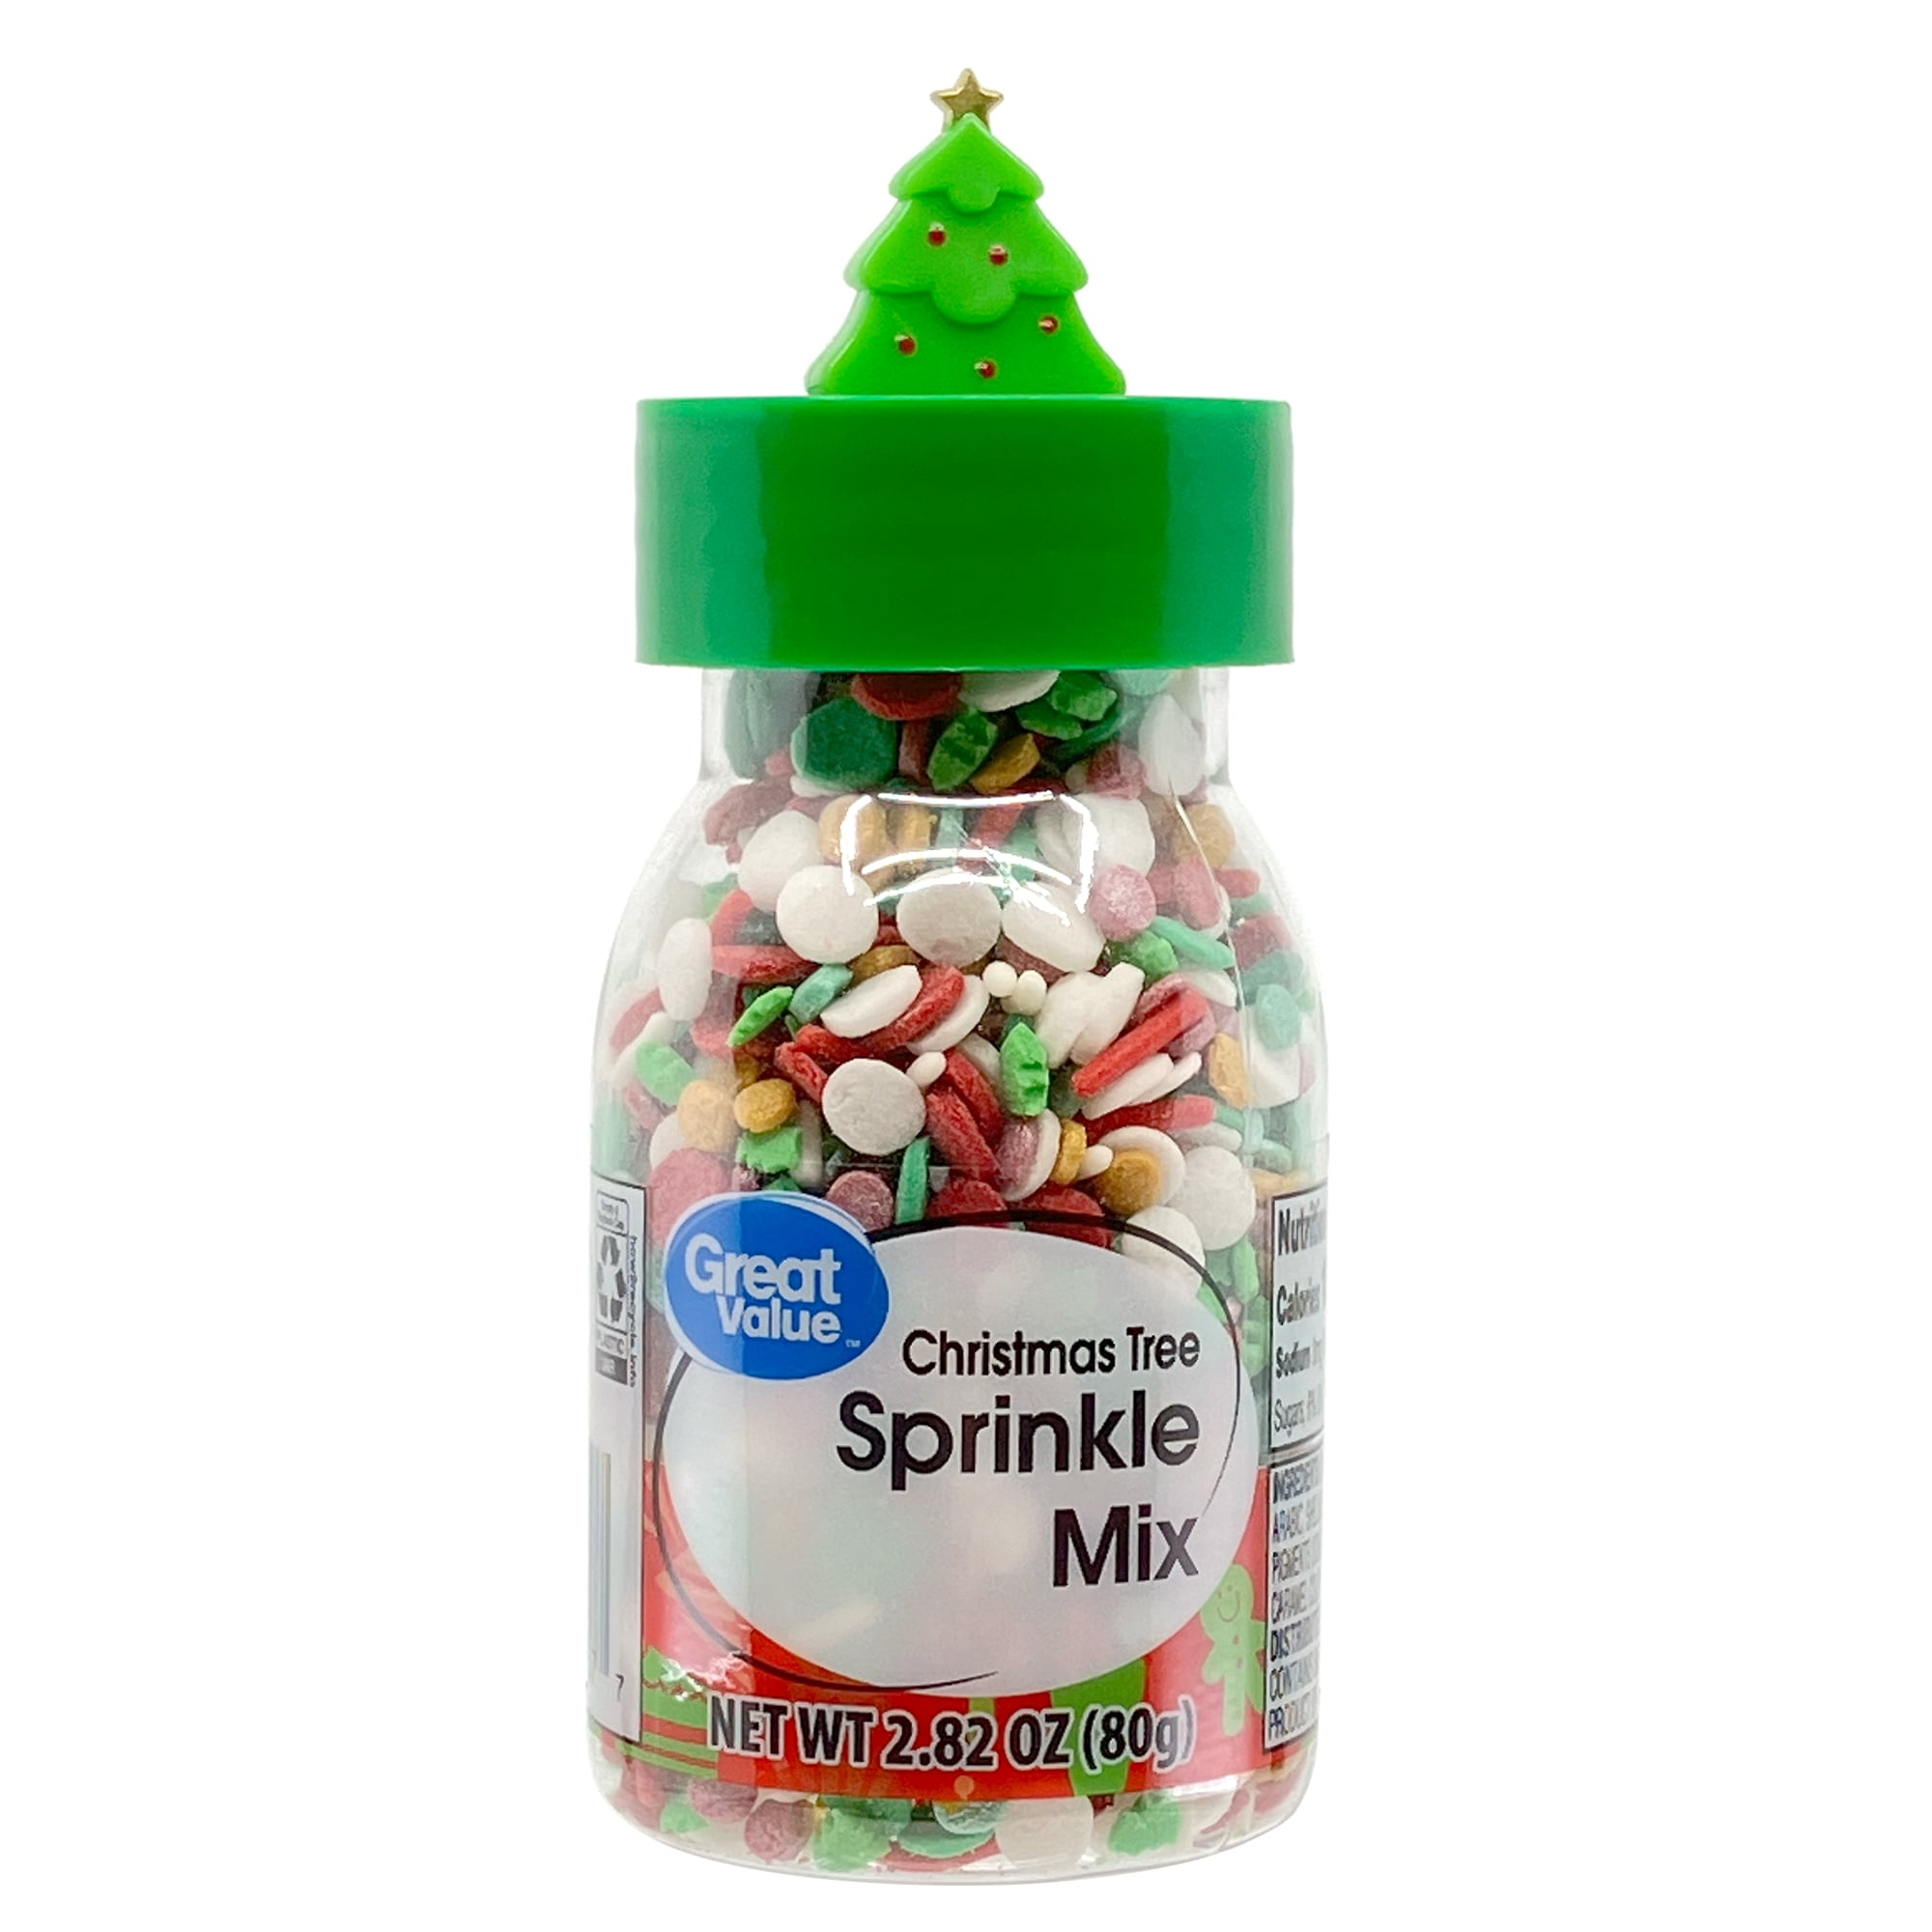 Great Value Christmas Tree Sprinkle Mix, 2.82 oz